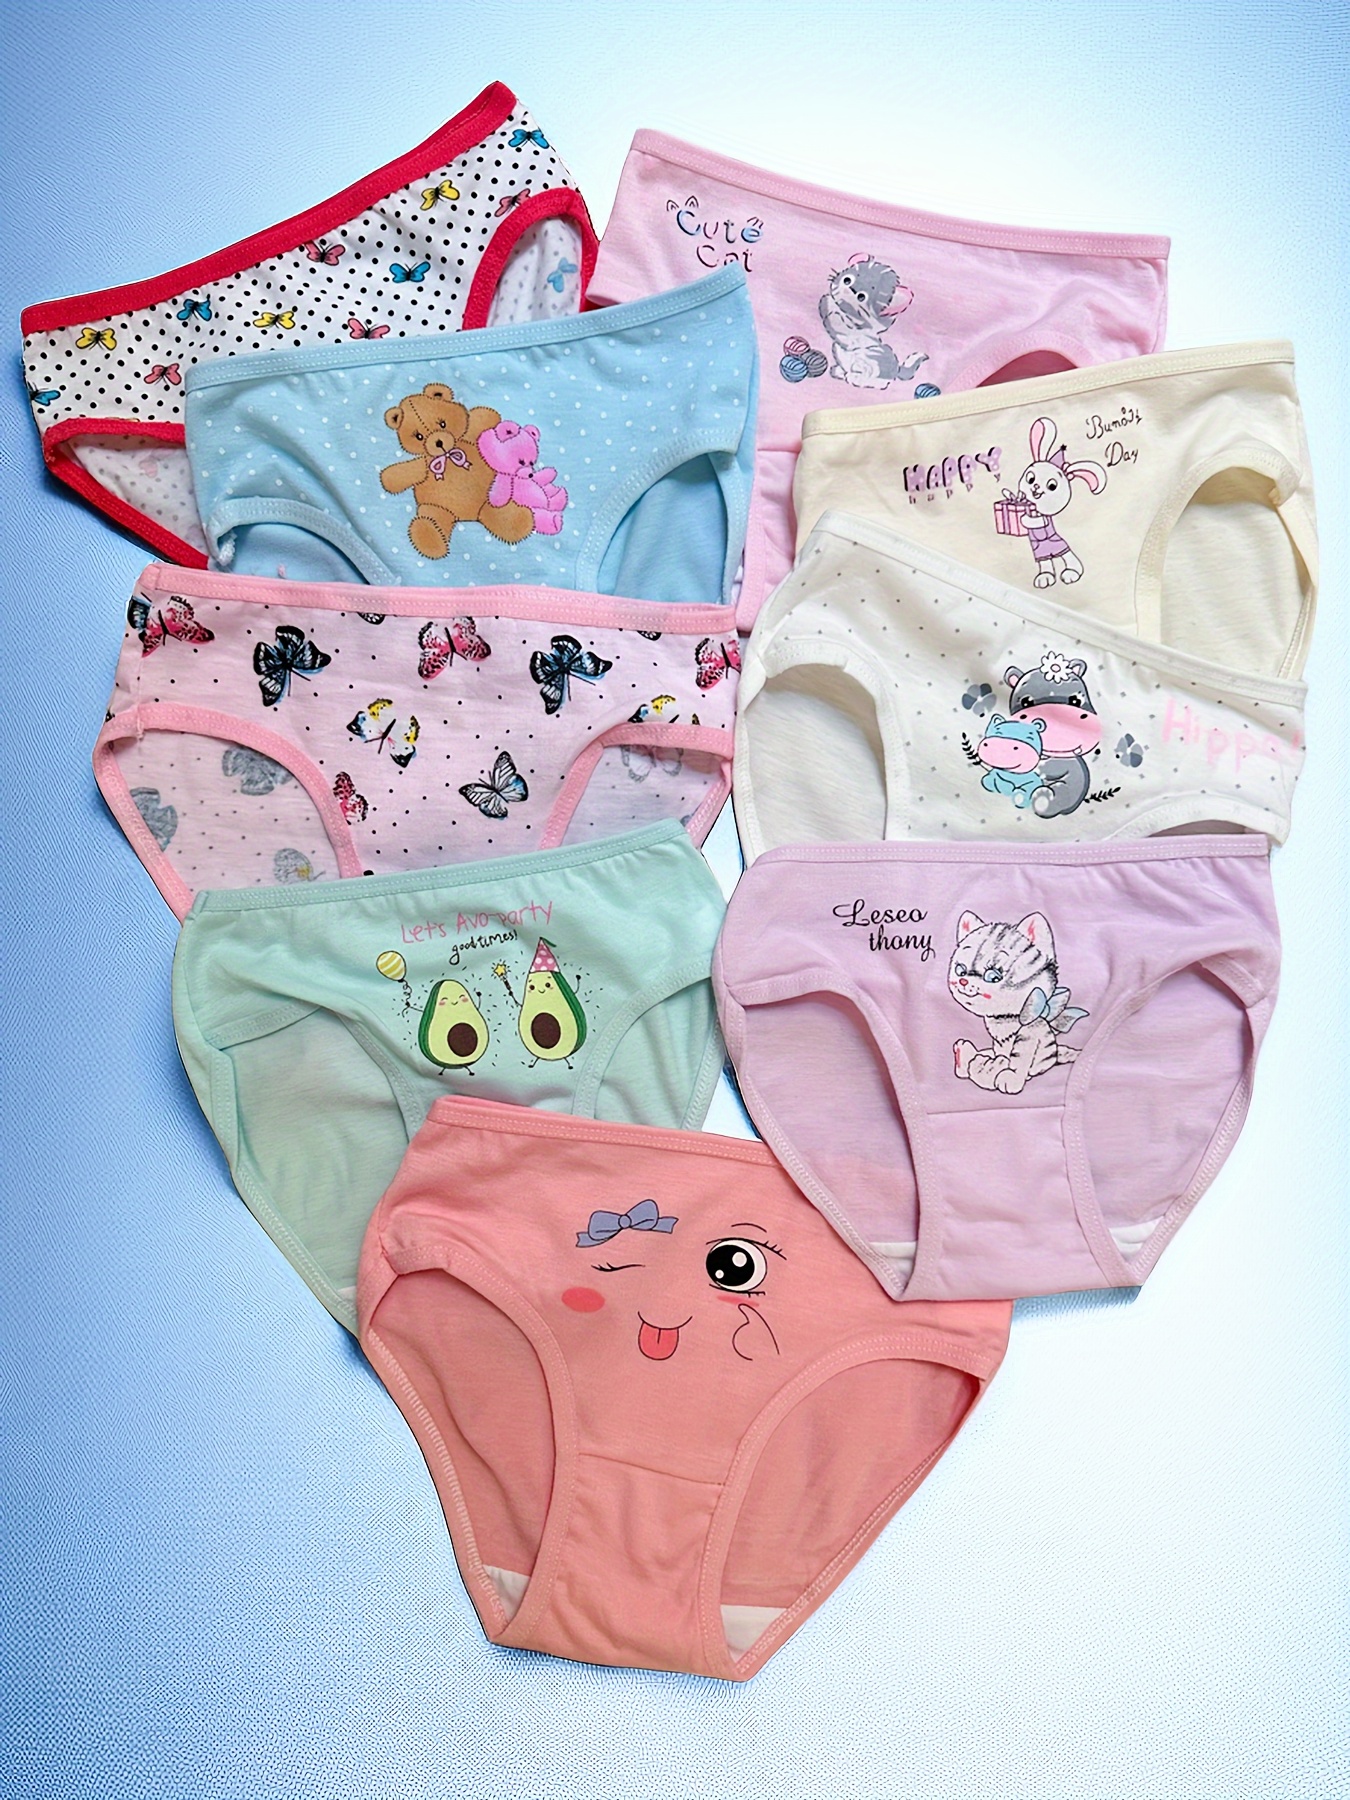 3PCS Kids Panties Dream Princess Briefs Girls Short Pants Children Underwear